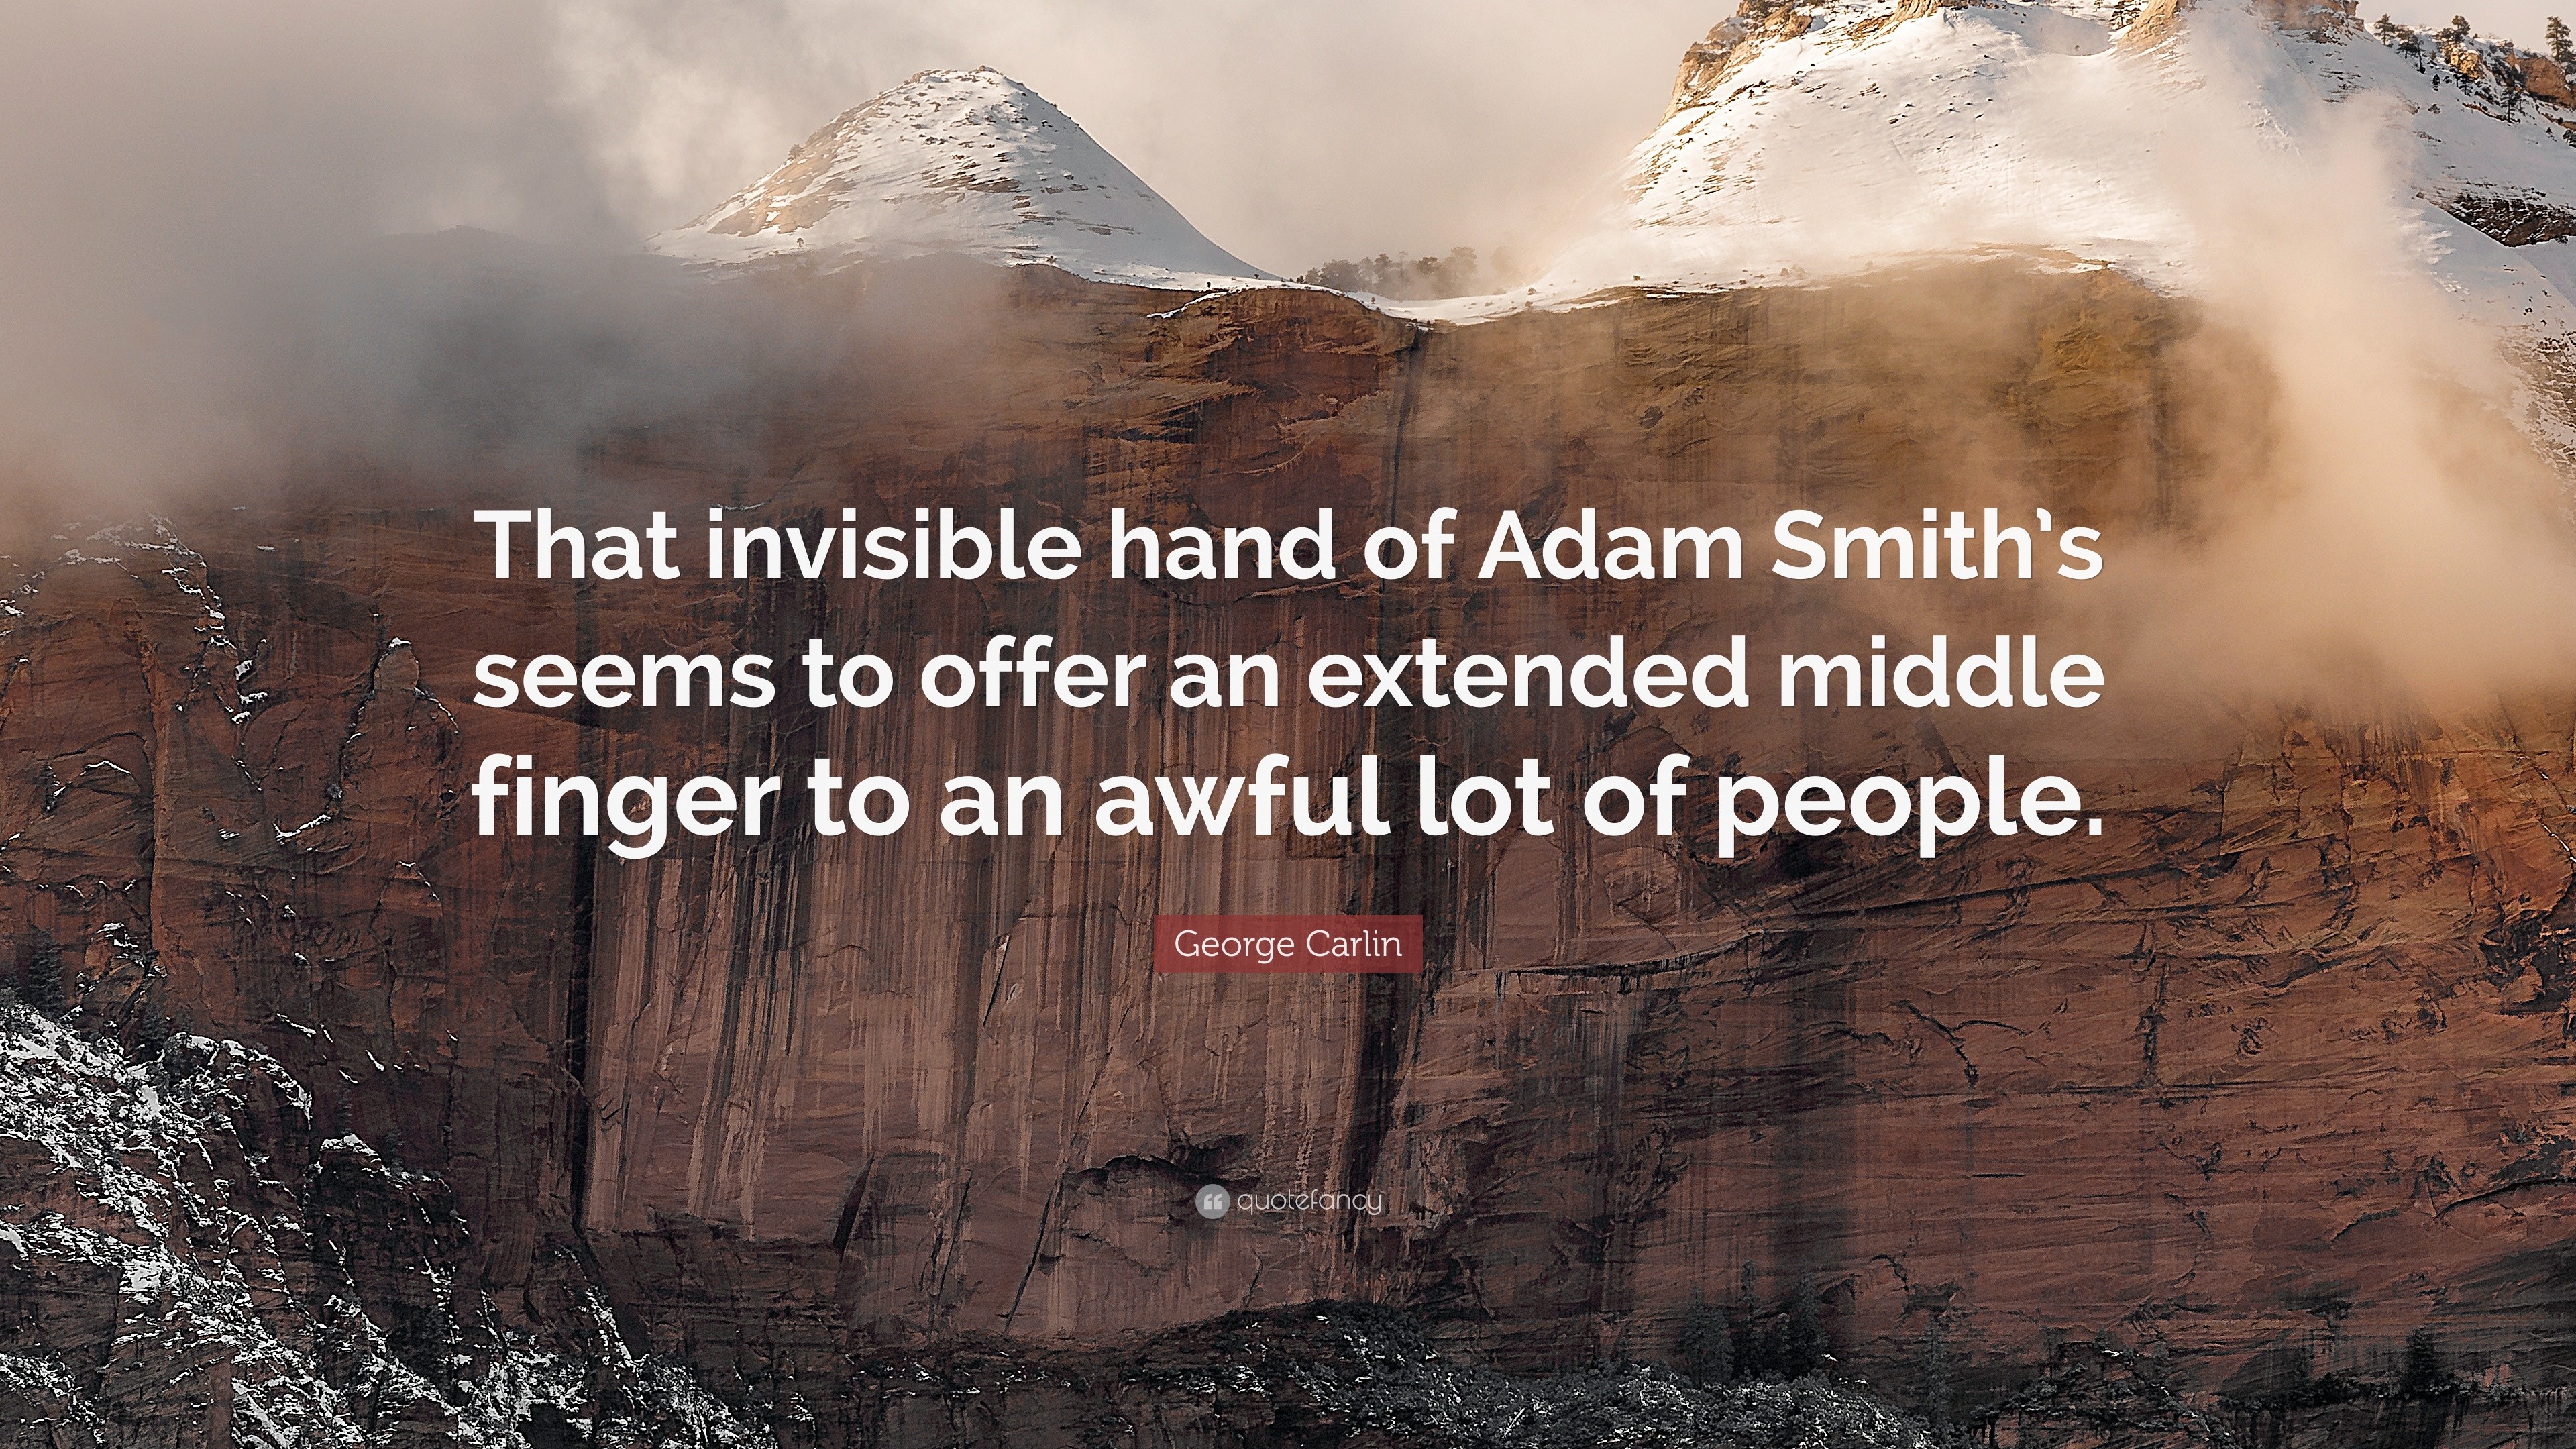 adam smith invisible hand passage